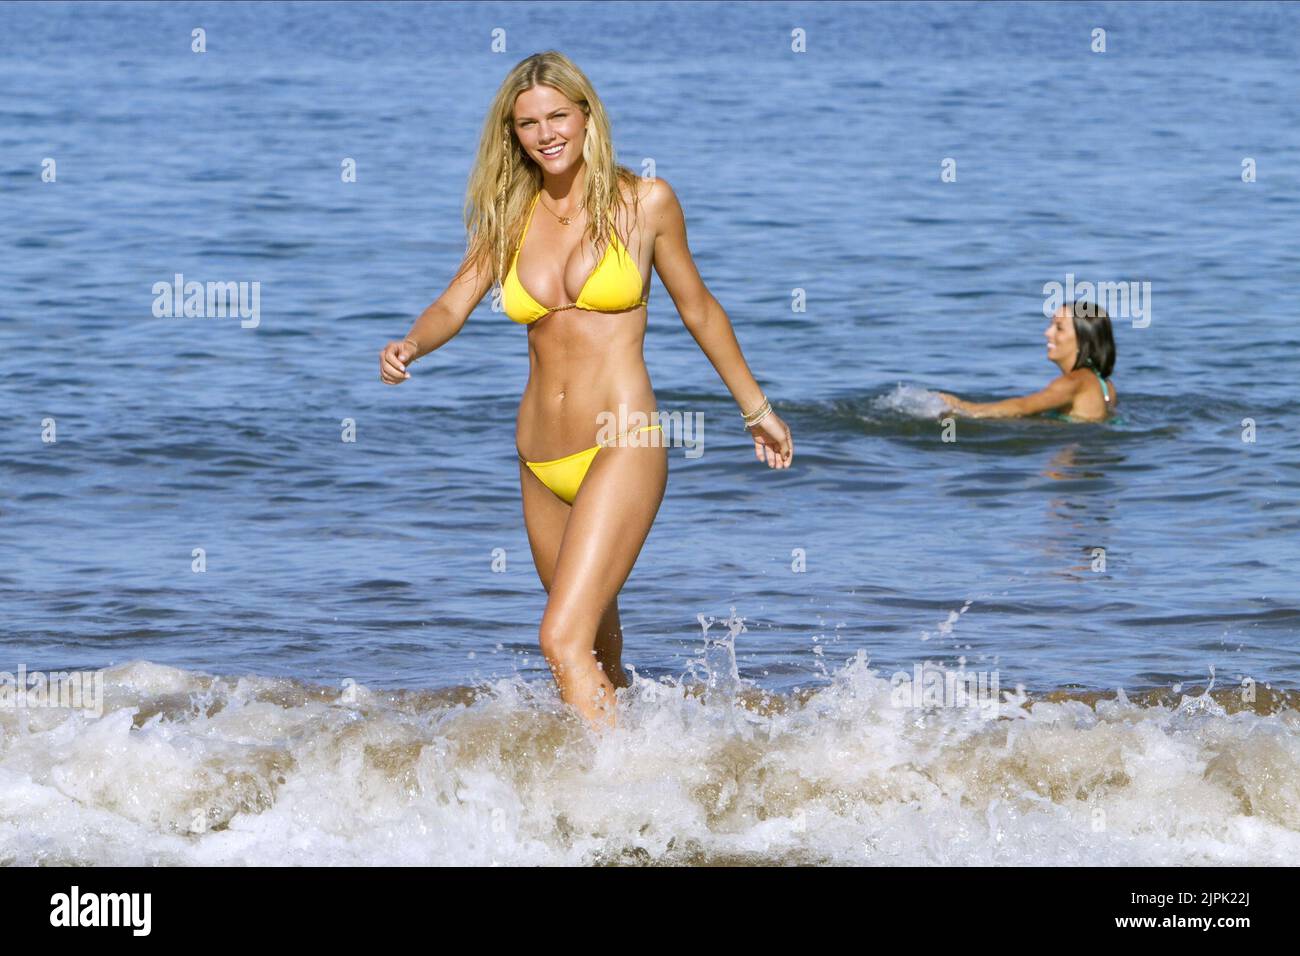 Brooklyn decker bikini fotografías e imágenes de alta resolución - Alamy